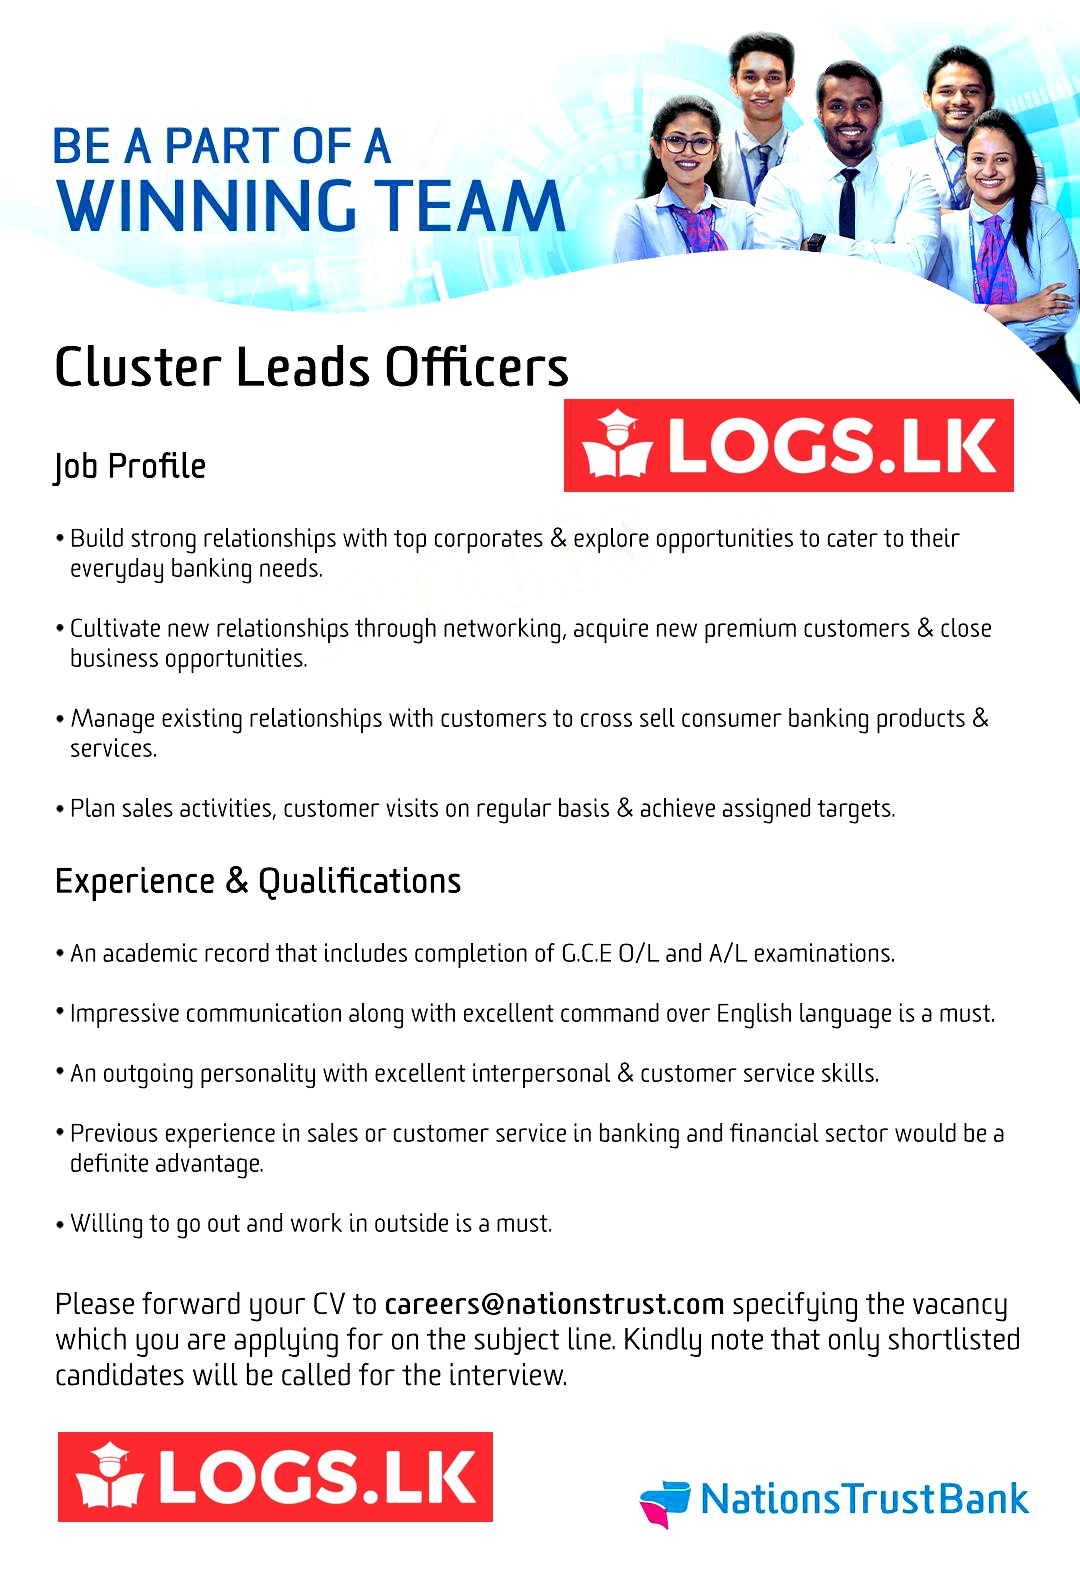 Cluster Leads Officer Jobs Vacancies - NTB Bank Jobs Vacancies Details